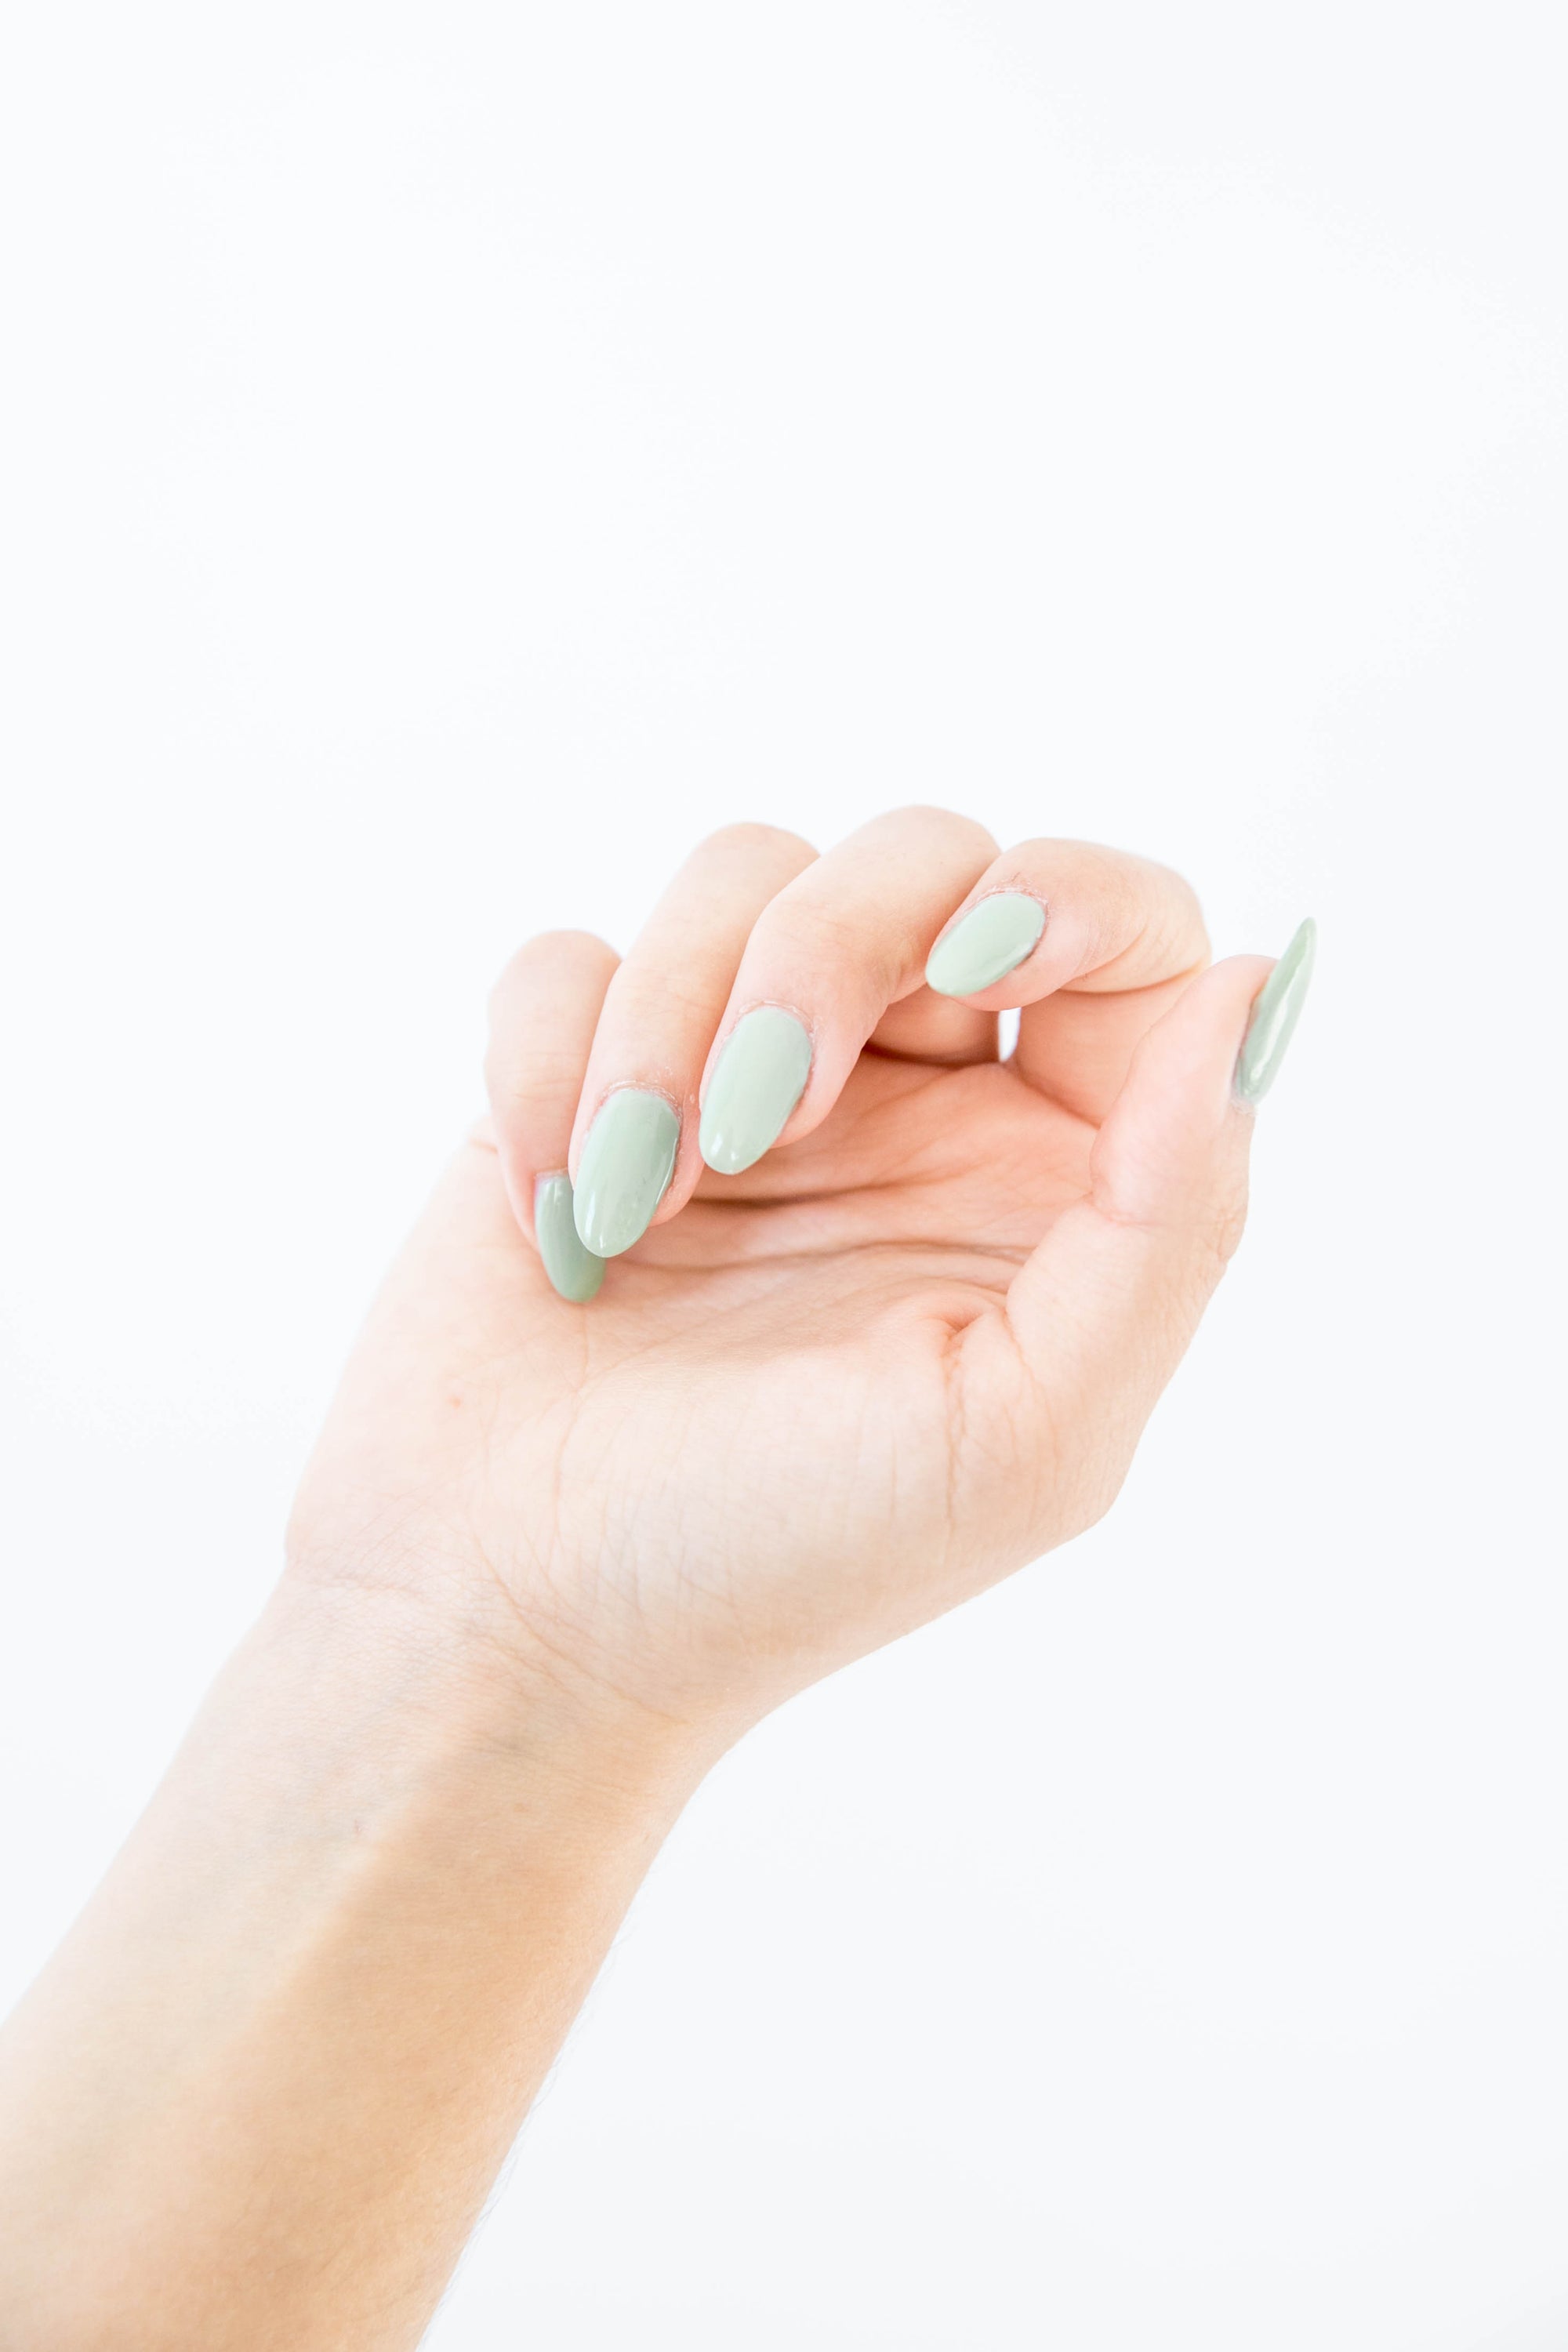 Gemini &amp; Serpentine nail polish painted nails